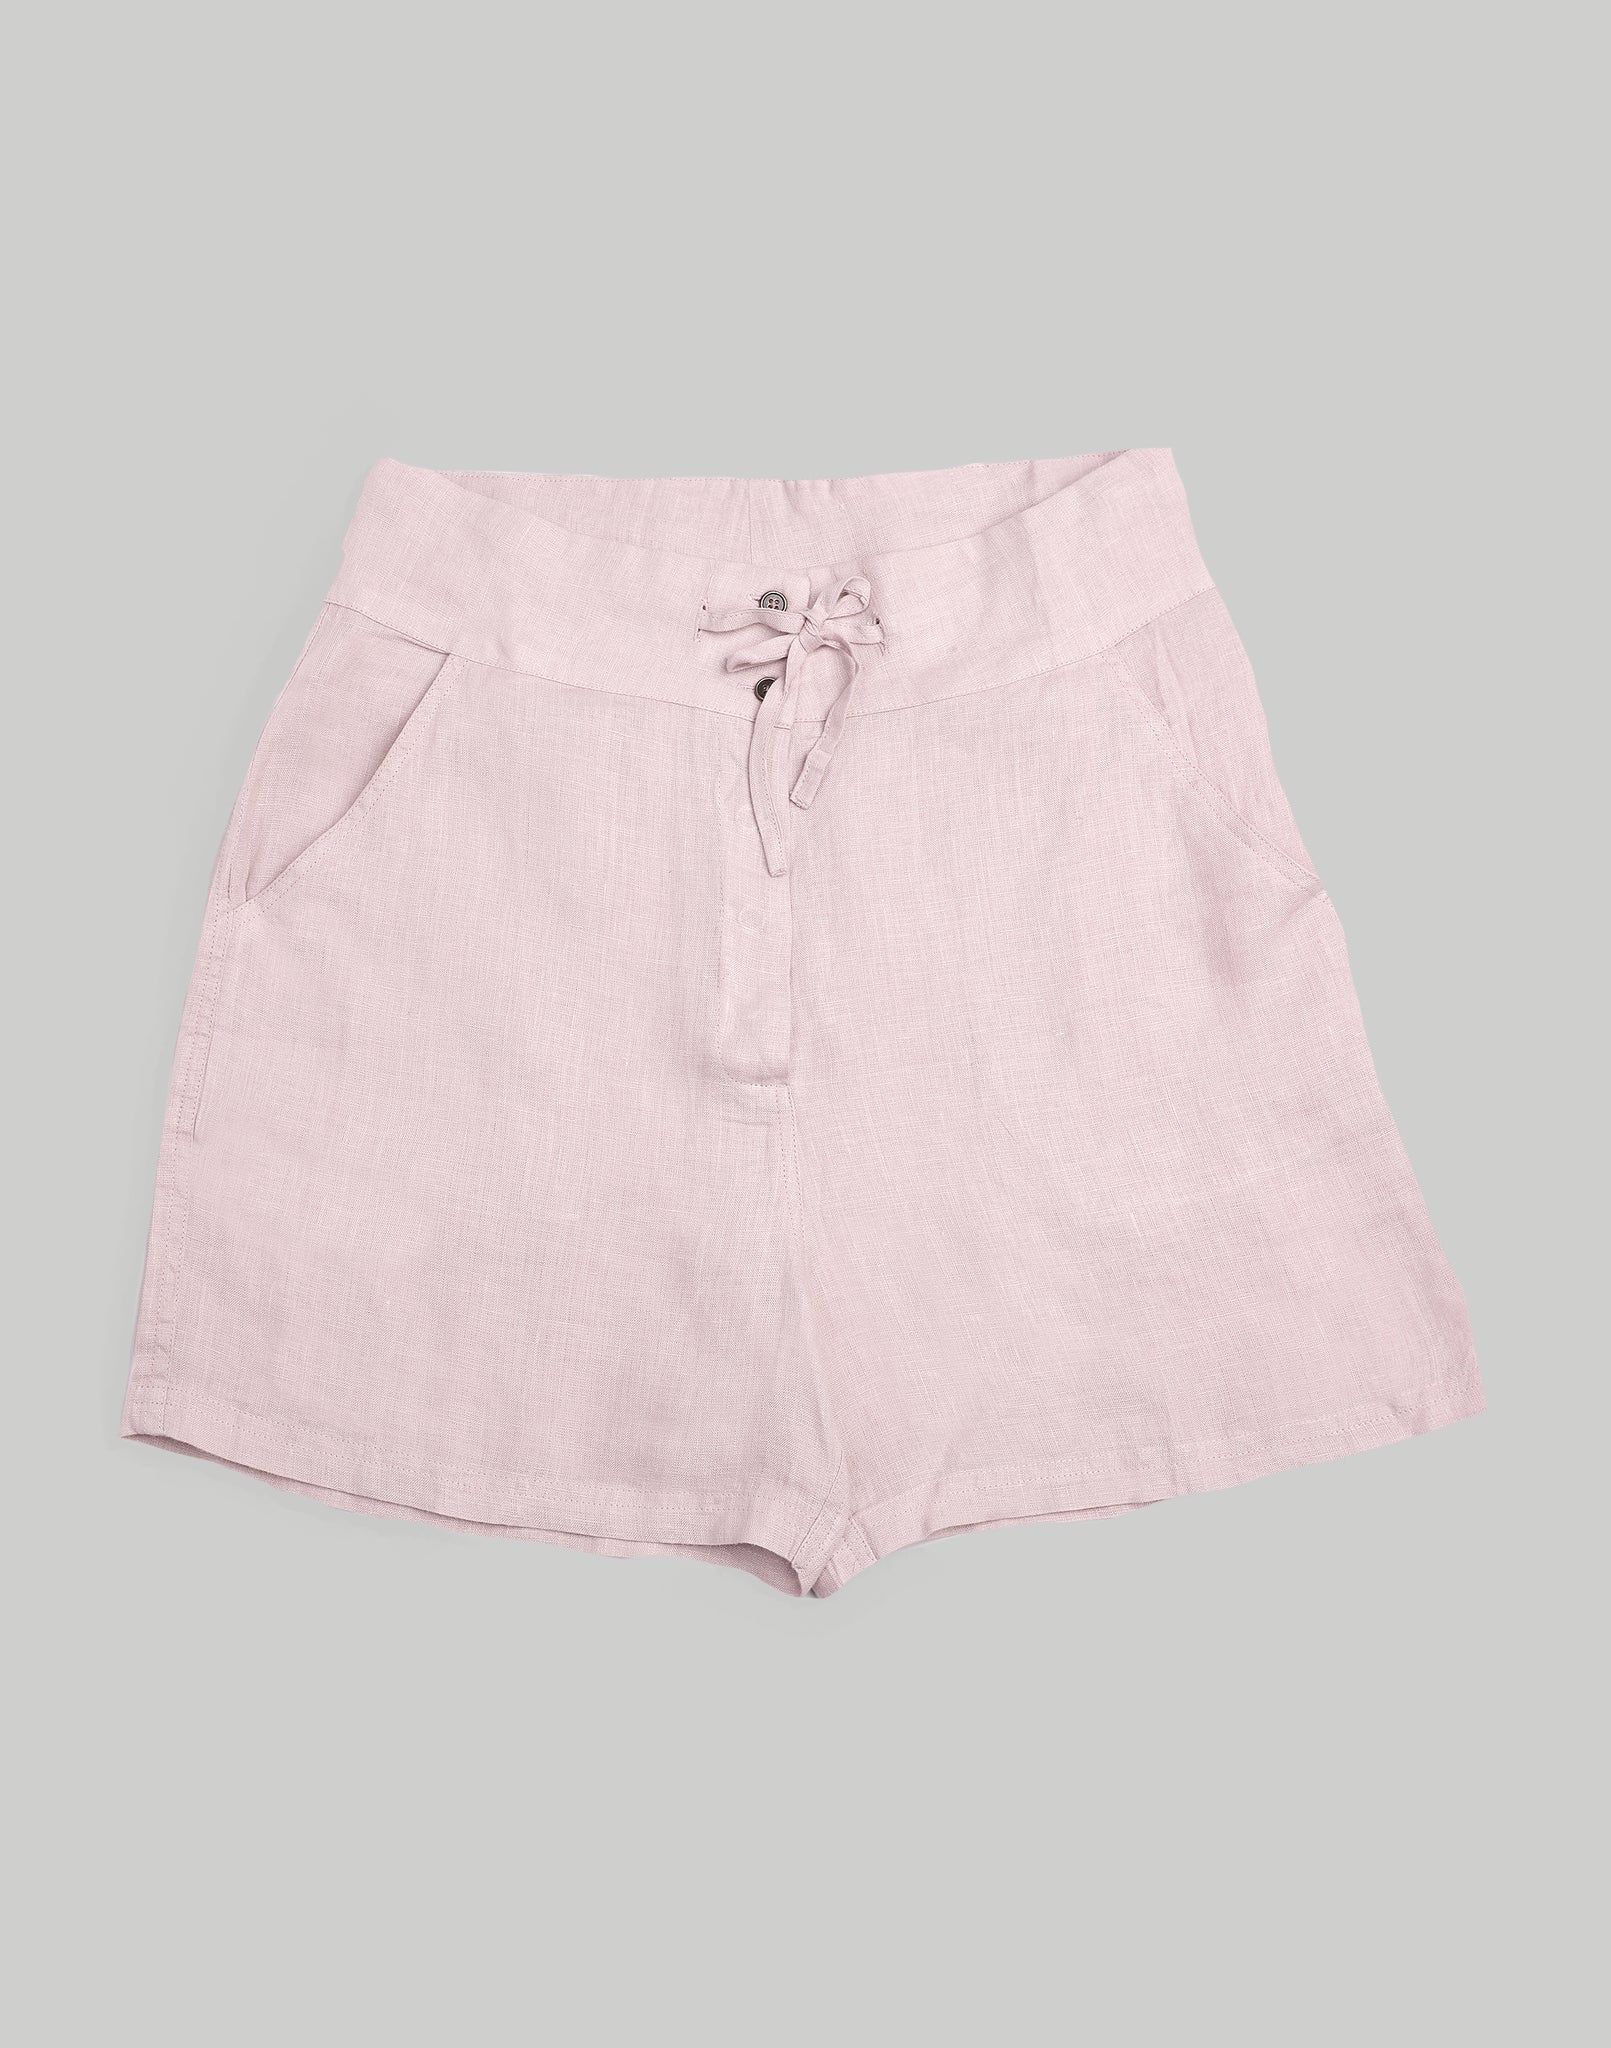 Drawstring Pink Shorts 4